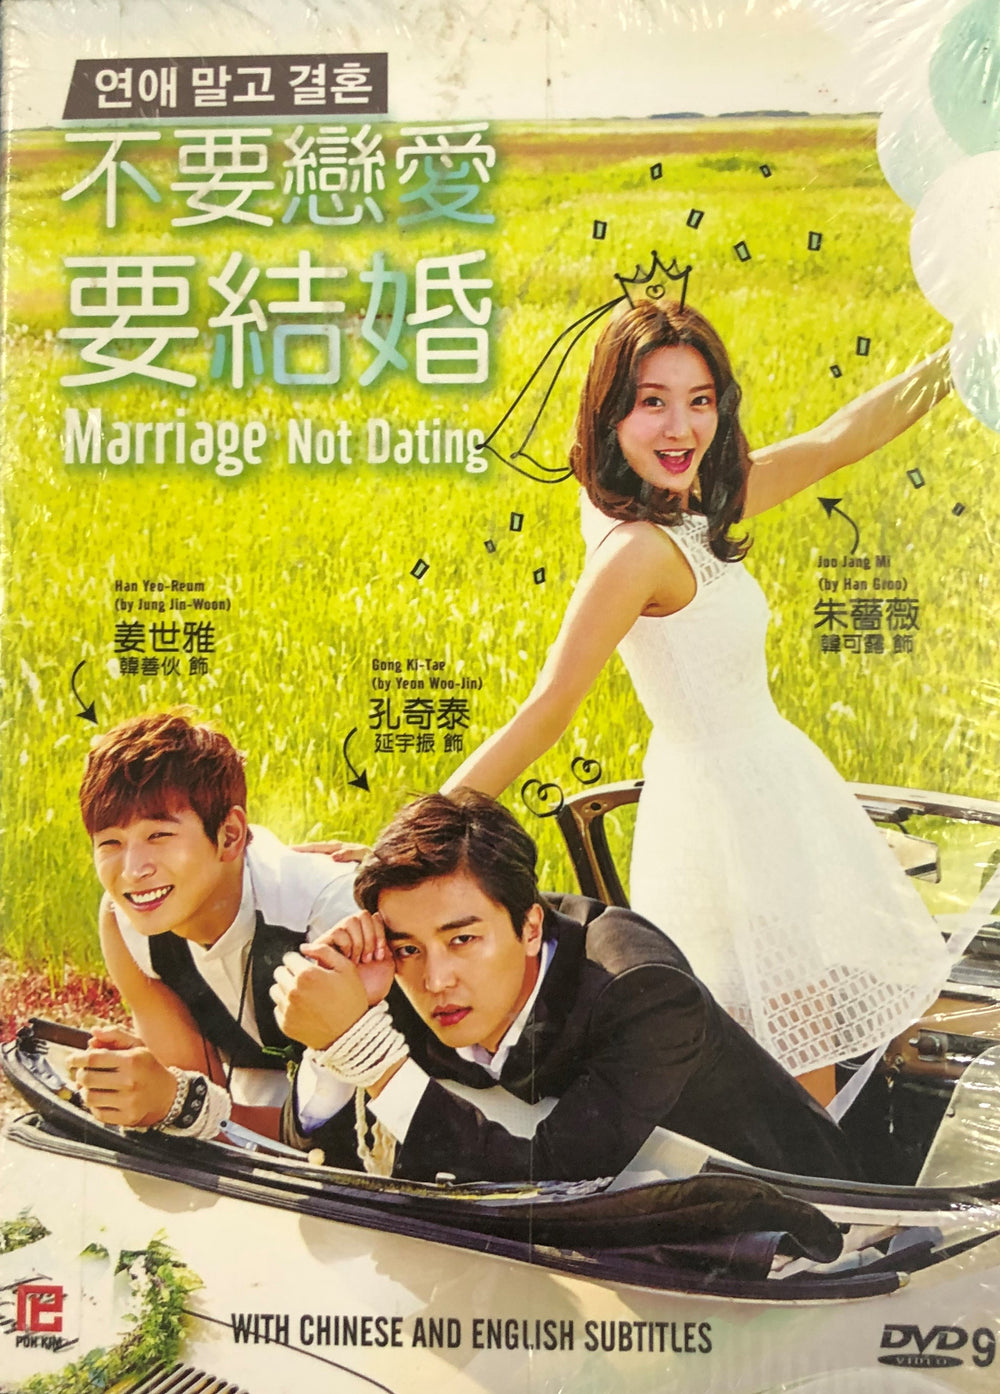 MARRIAGE NOT DATING 2014 (KOREAN DRAMA) DVD 1-16 EPIDOES  ENGLISH SUB (REGION FREE)